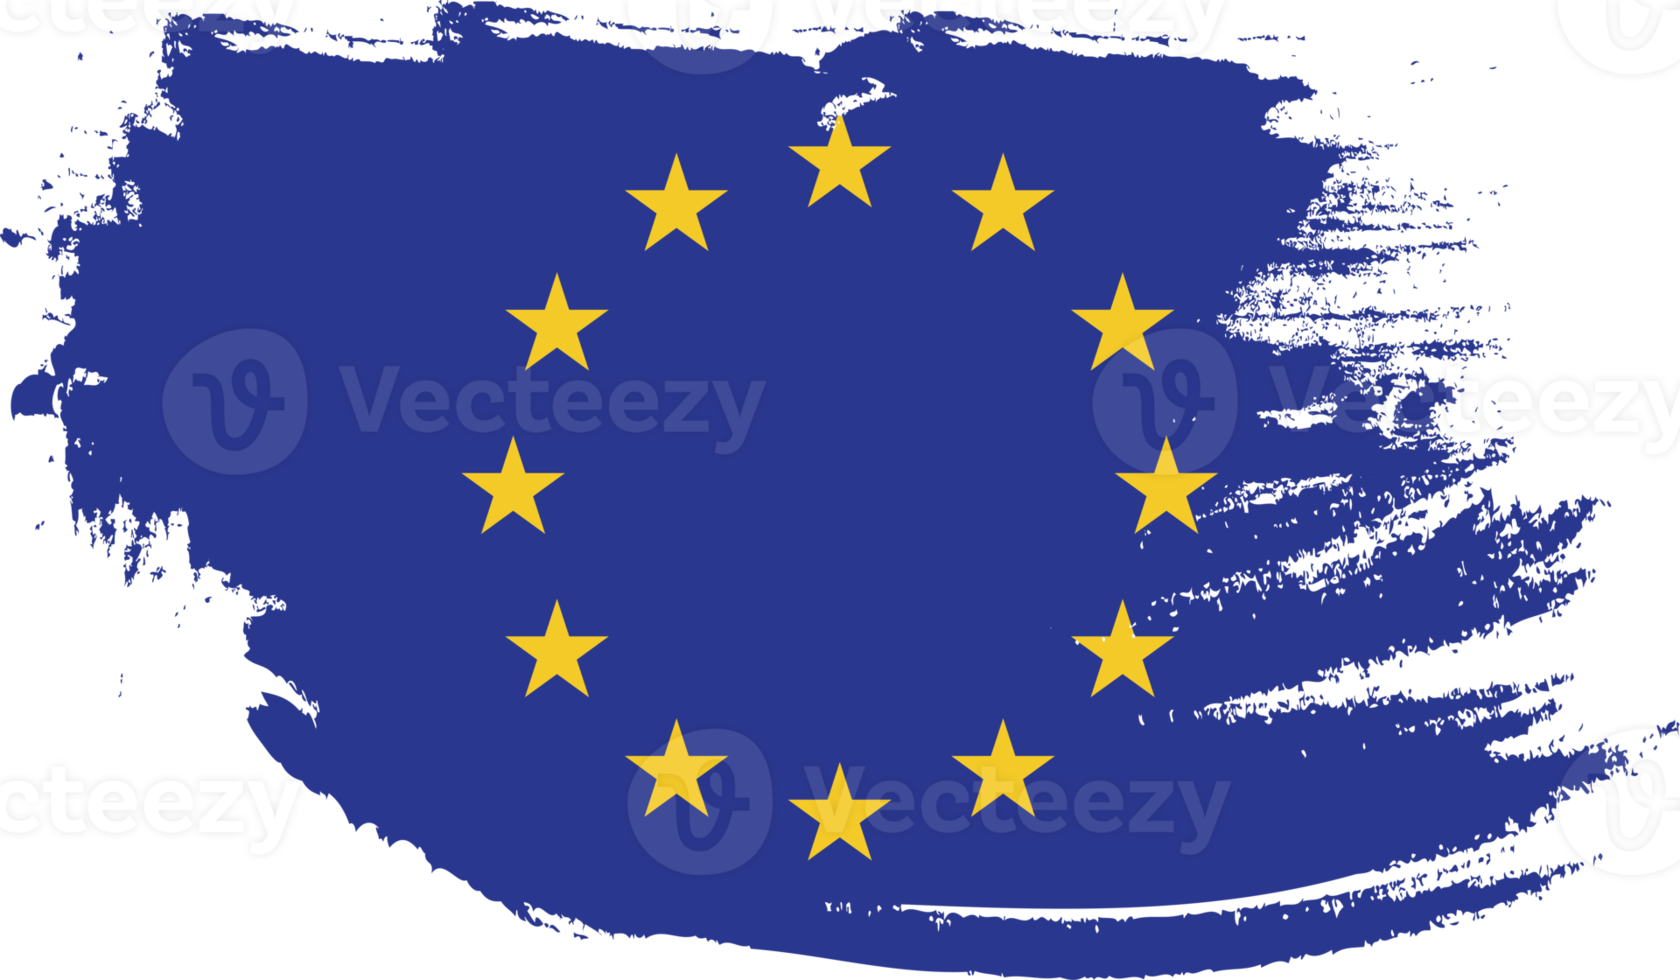 Europaflagge #019 - Hintergrundbild